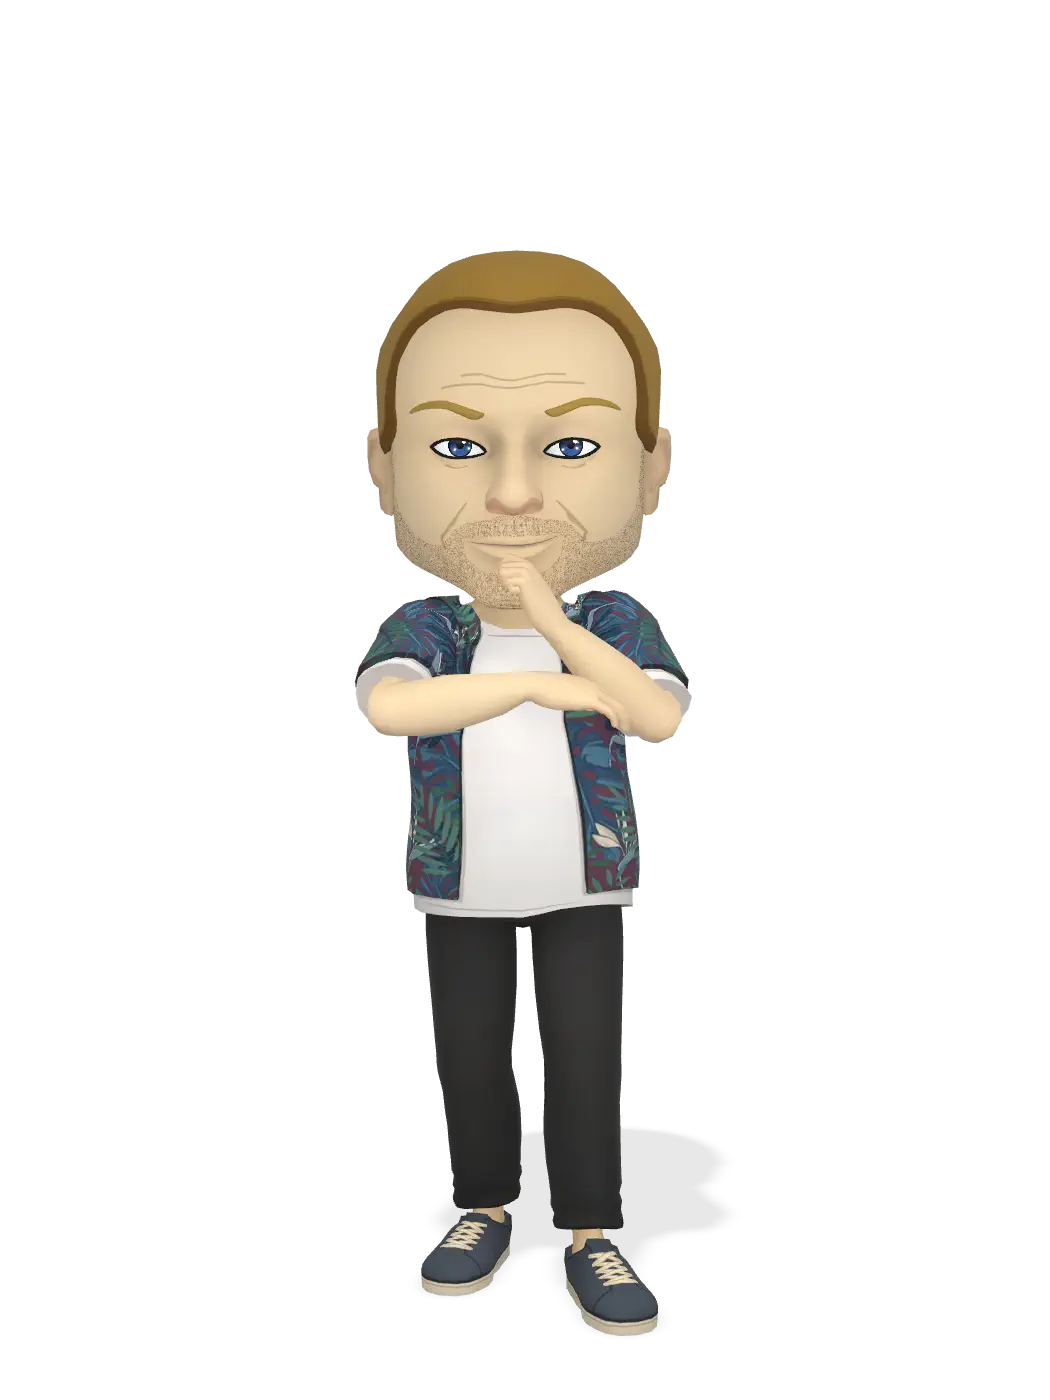 3D Bitmoji for rggedu avatar